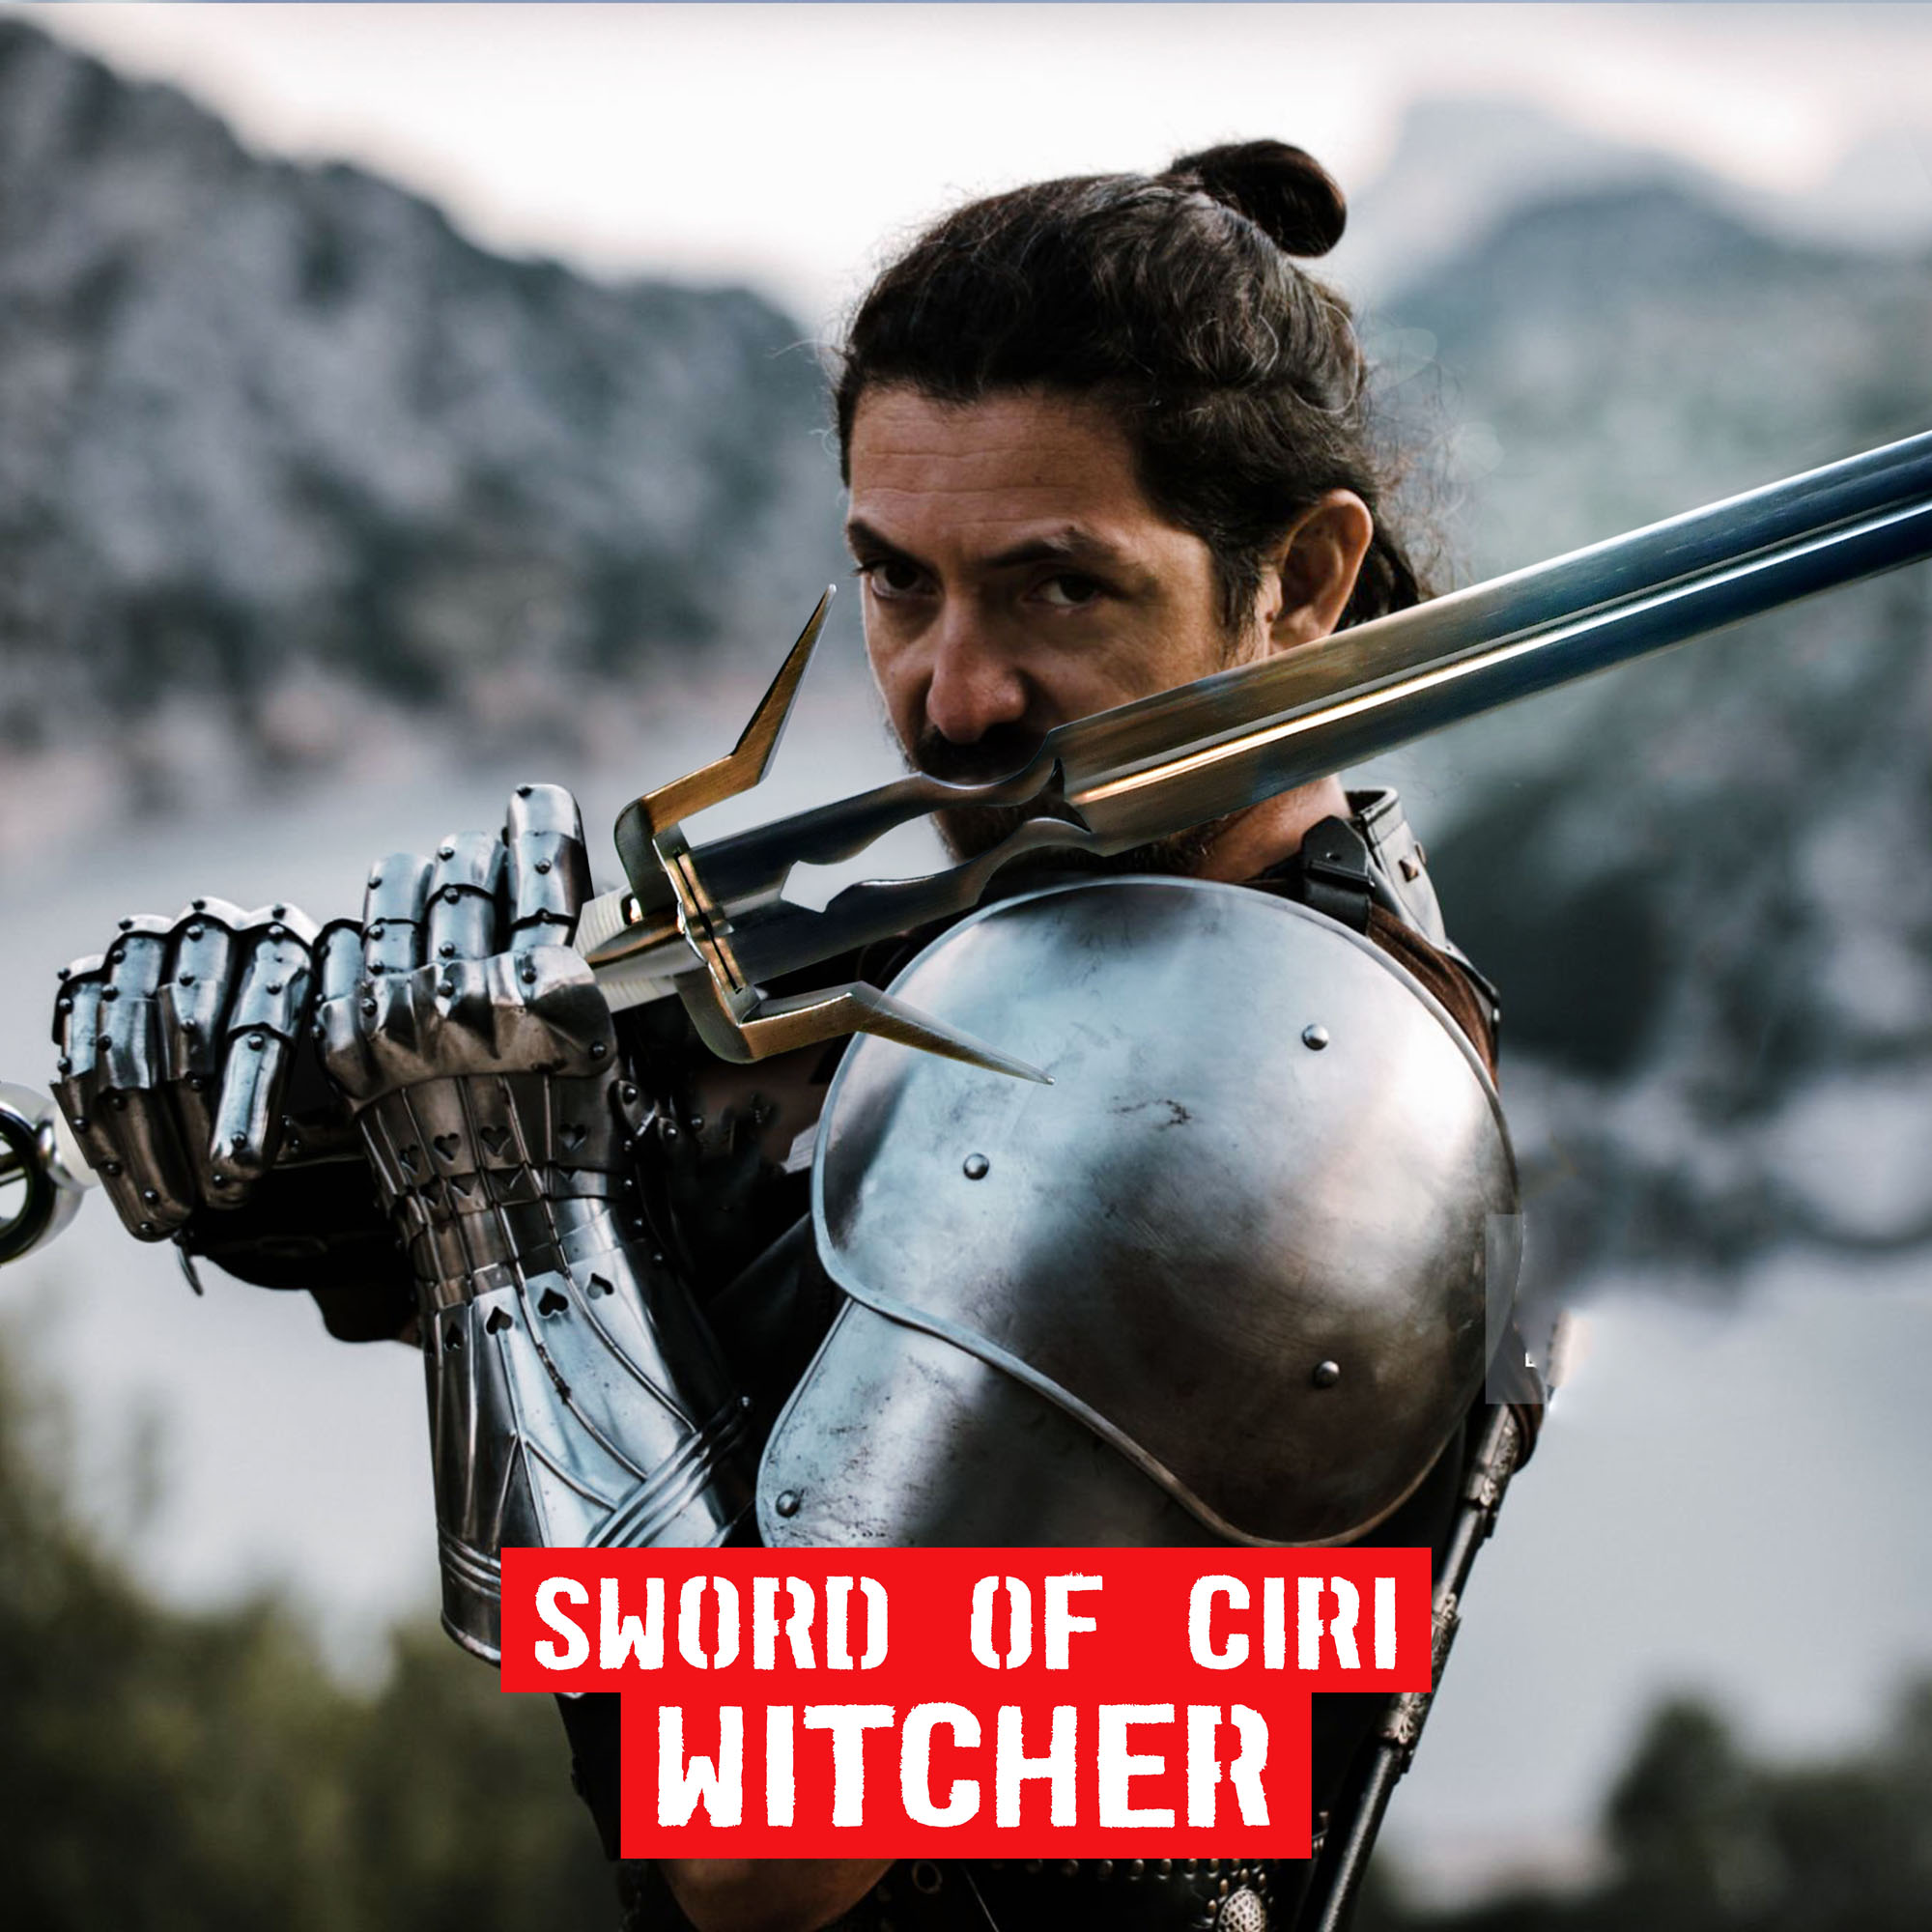 Witcher - Zireael Sword of Ciri with scabbard